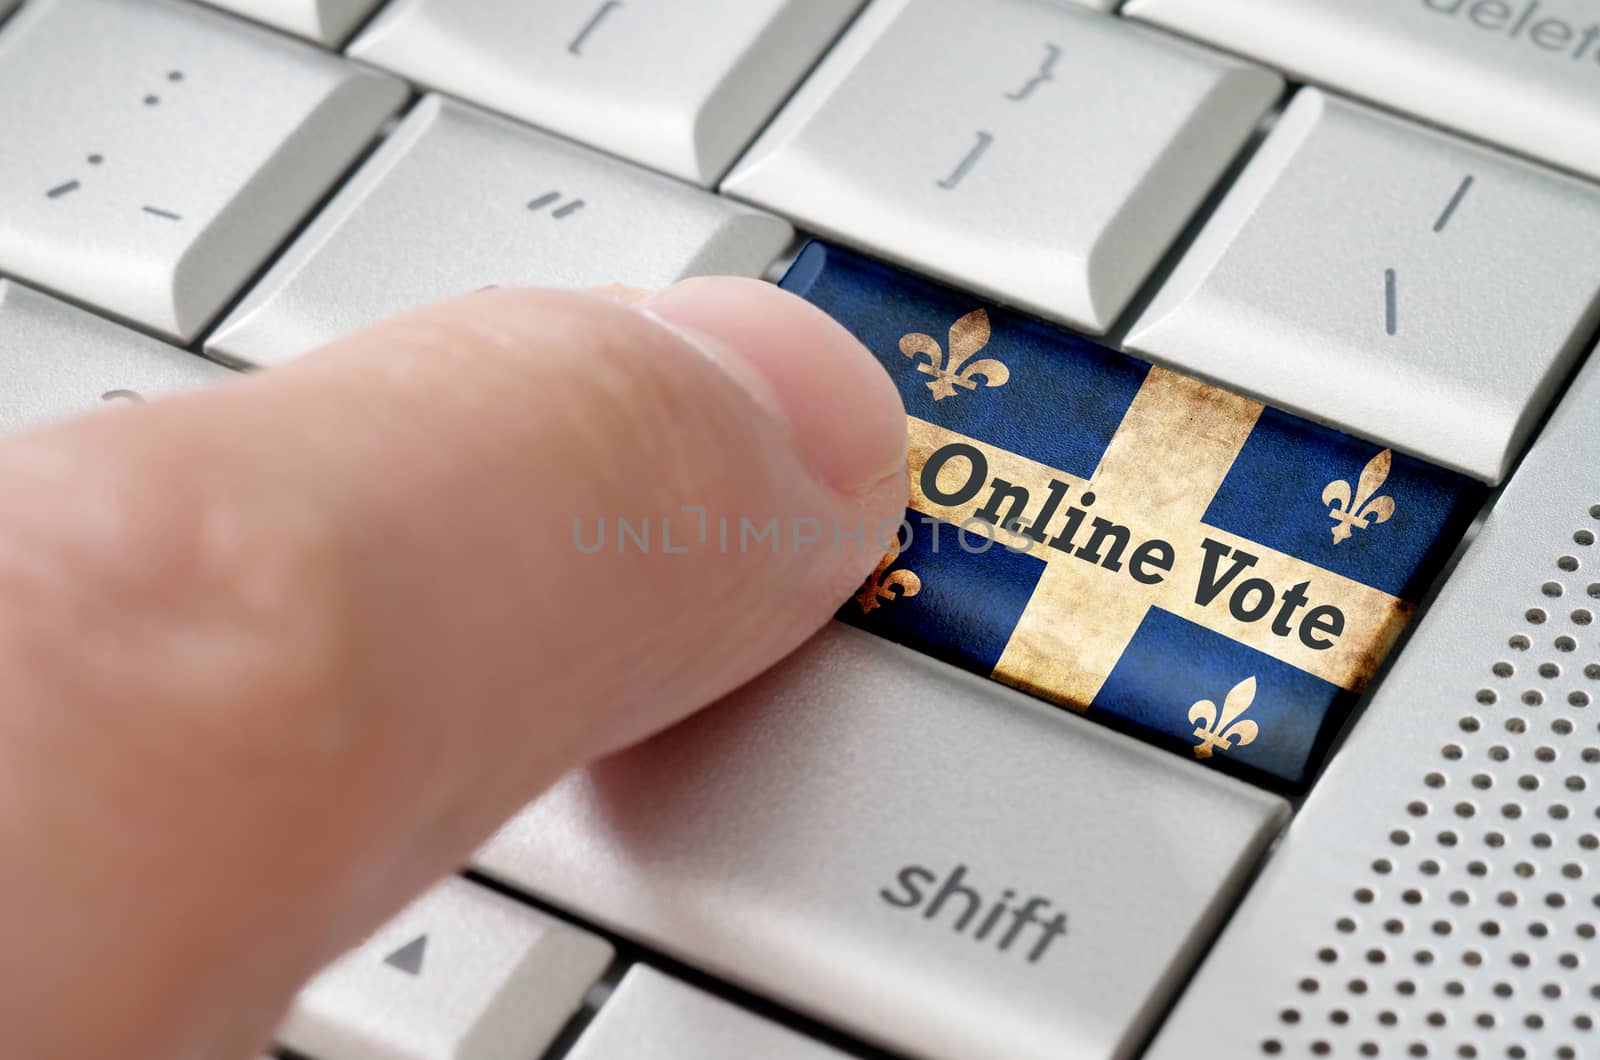 Quebec online voting concept on metallic keyboard